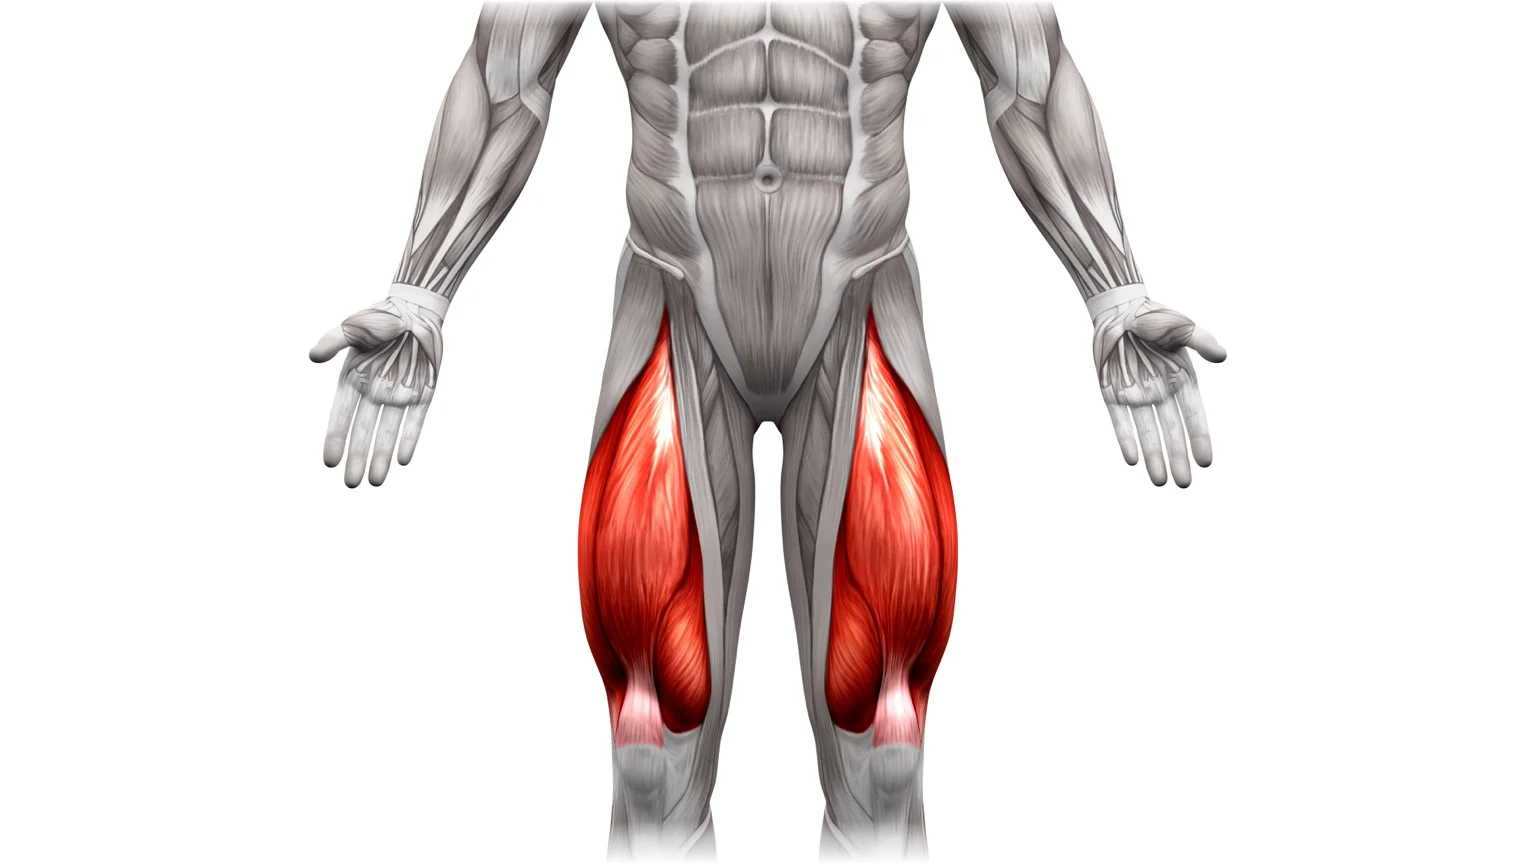 Diagram showing quadriceps muscles